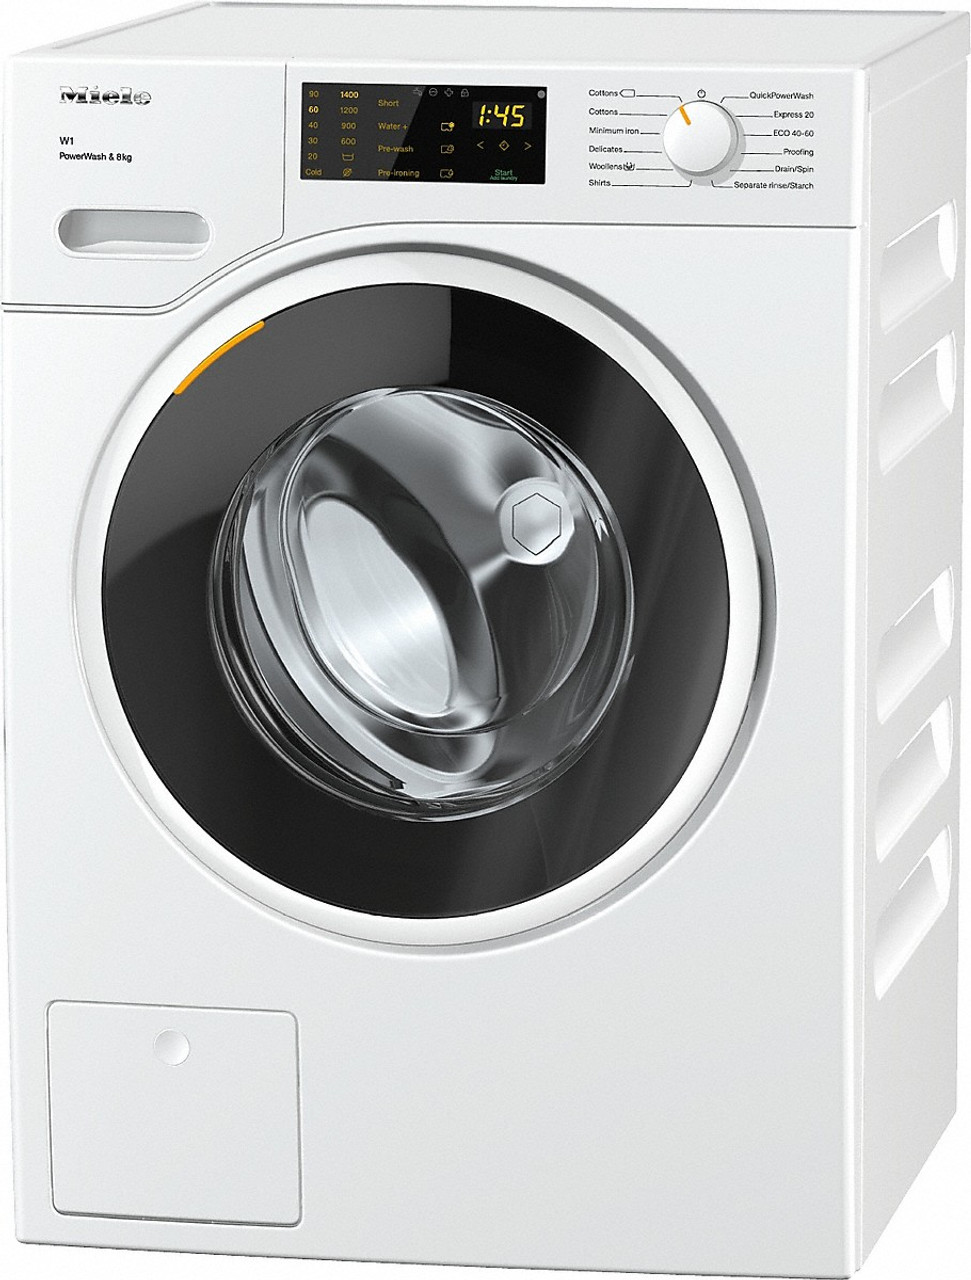 WWD320 - 8KG Front-Load Washing Machine